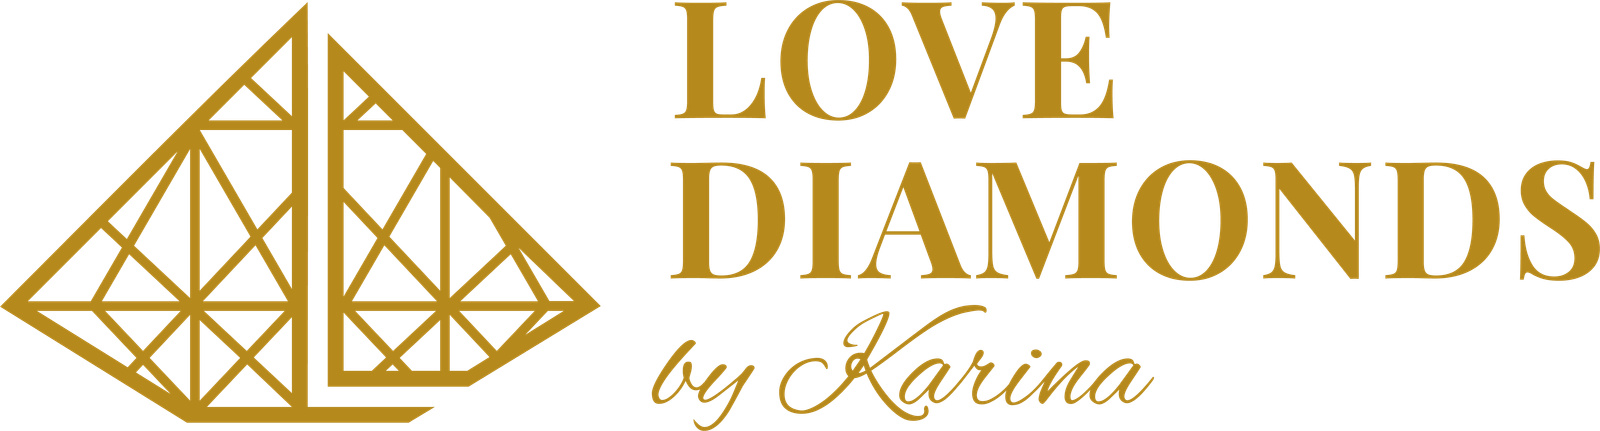 love_diamonds_logo